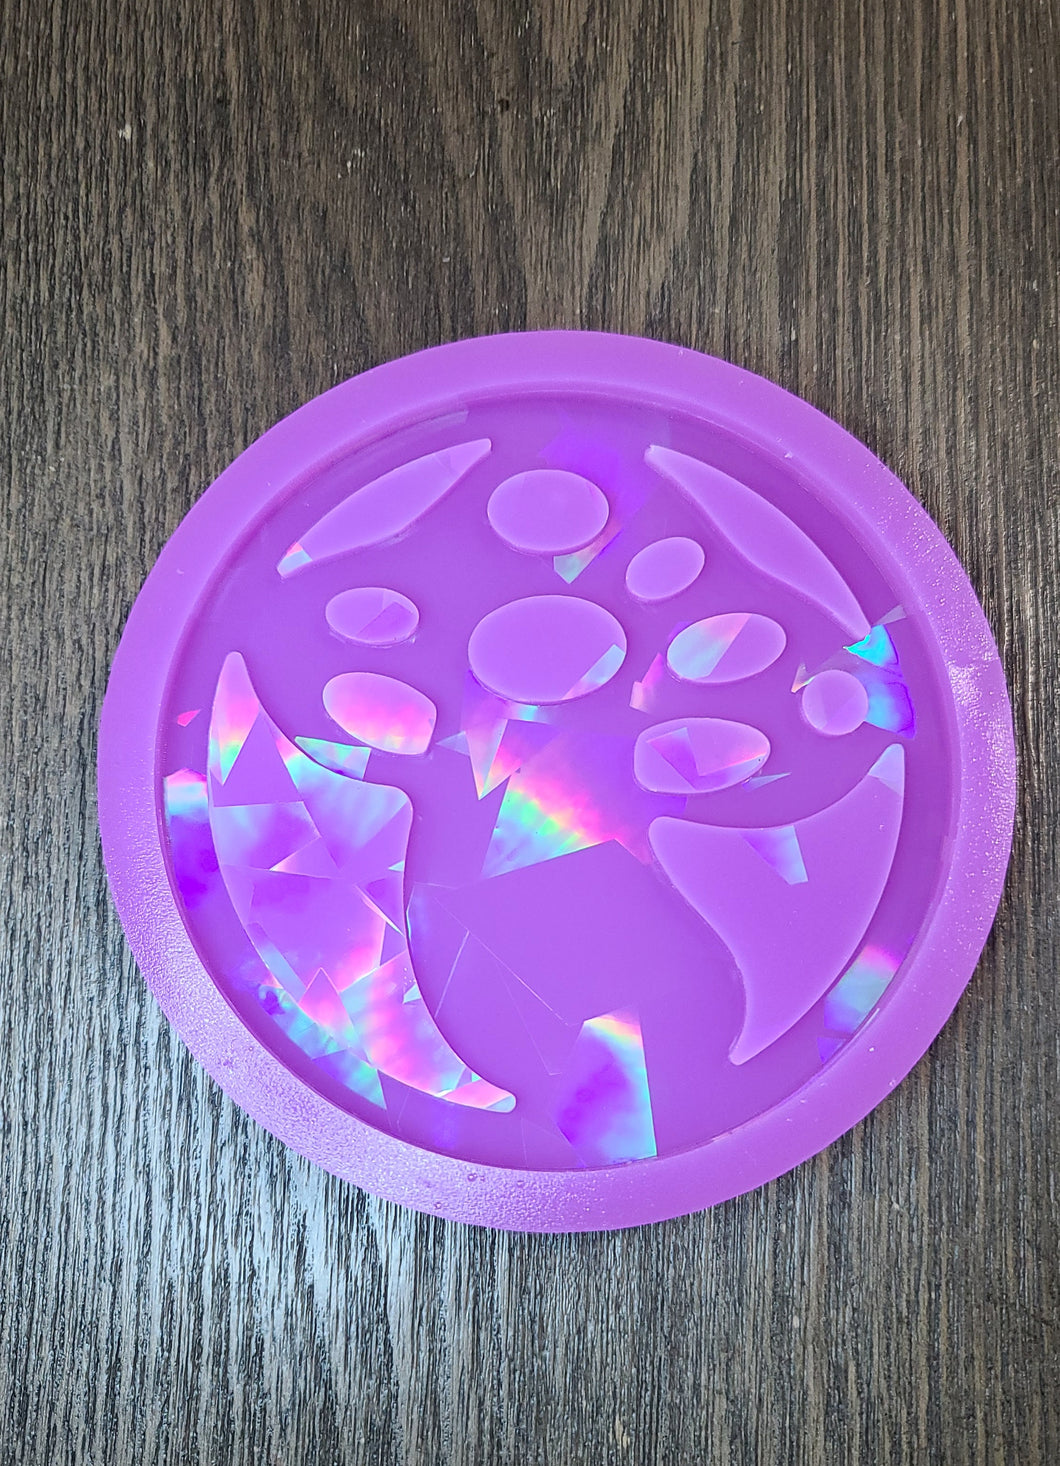 BGRADE - 4 inch HOLO Mushroom Coaster Silicone Mold